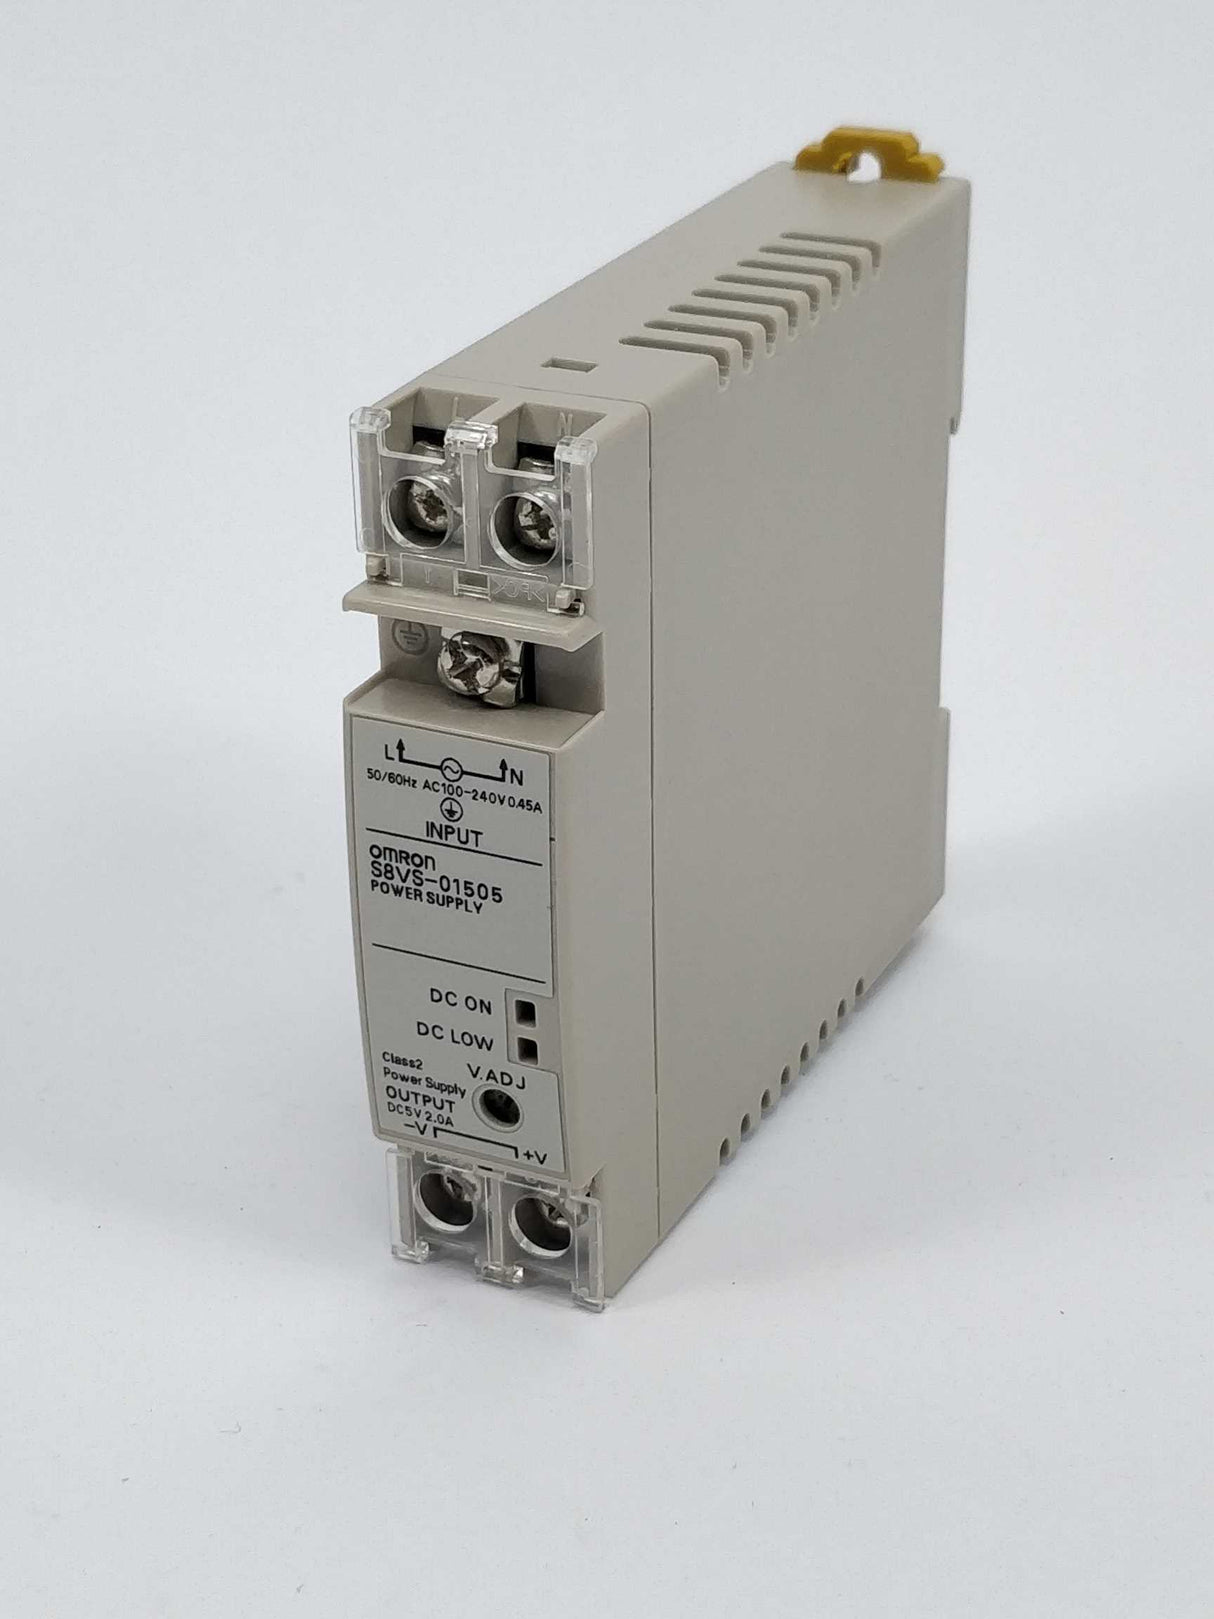 OMRON S8VS-01505 5V 2A Power supply